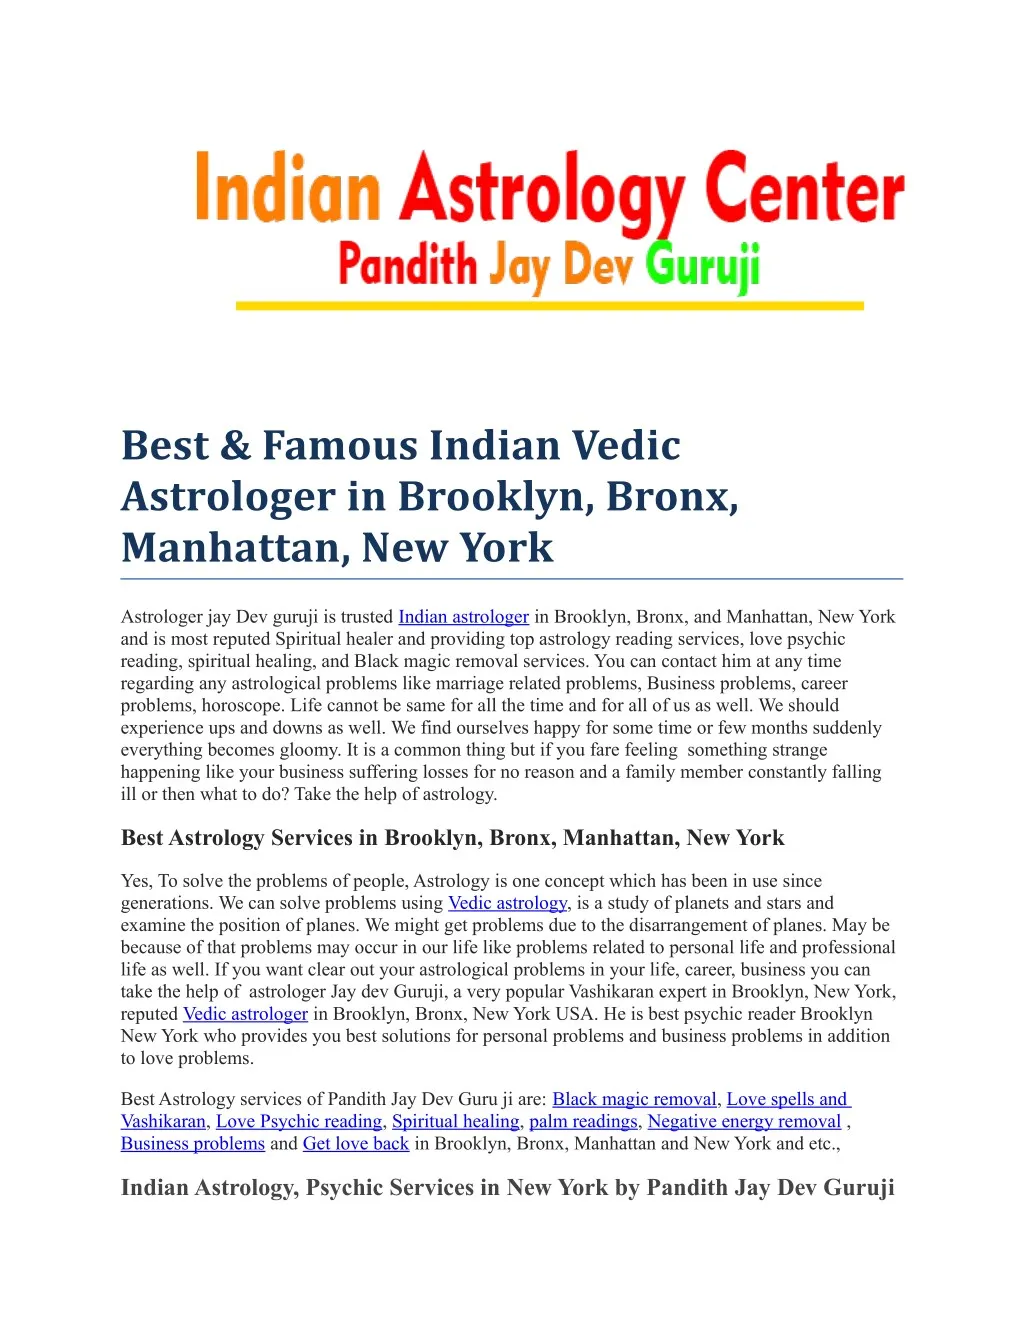 best famous indian vedic astrologer in brooklyn